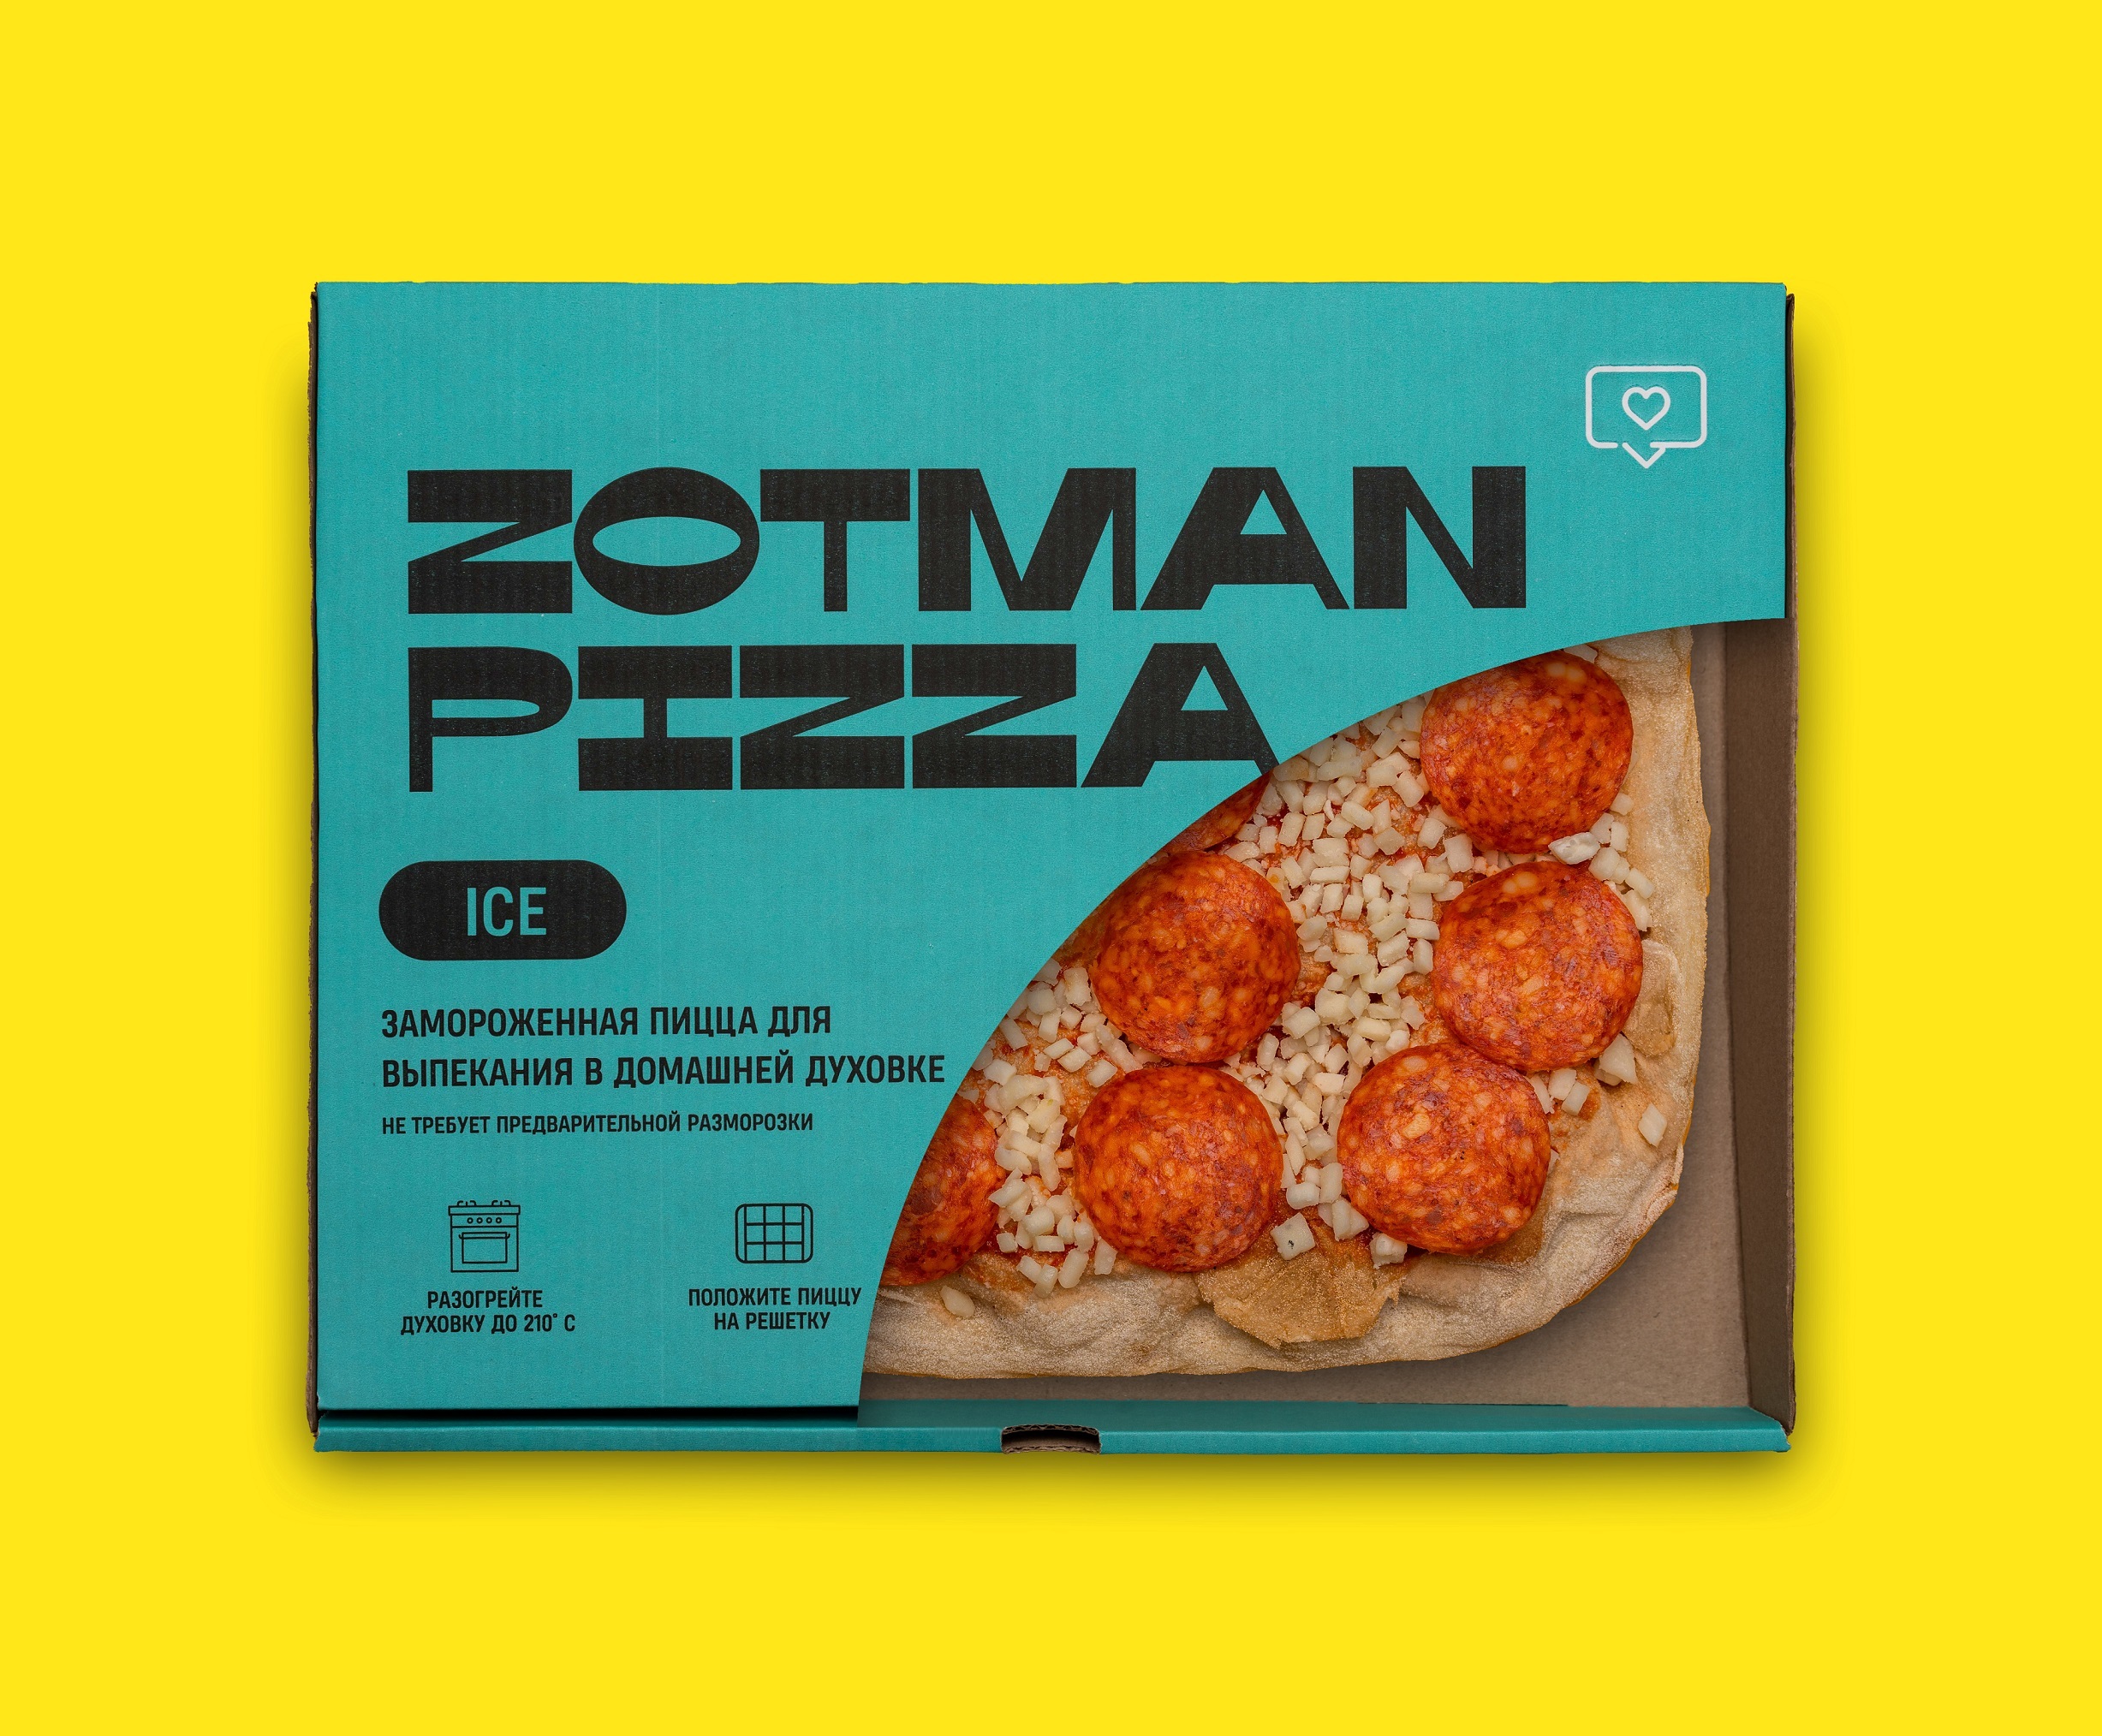 Зотман пепперони. Пицца zo. Zotman pizza замороженная. Zottman пицца.